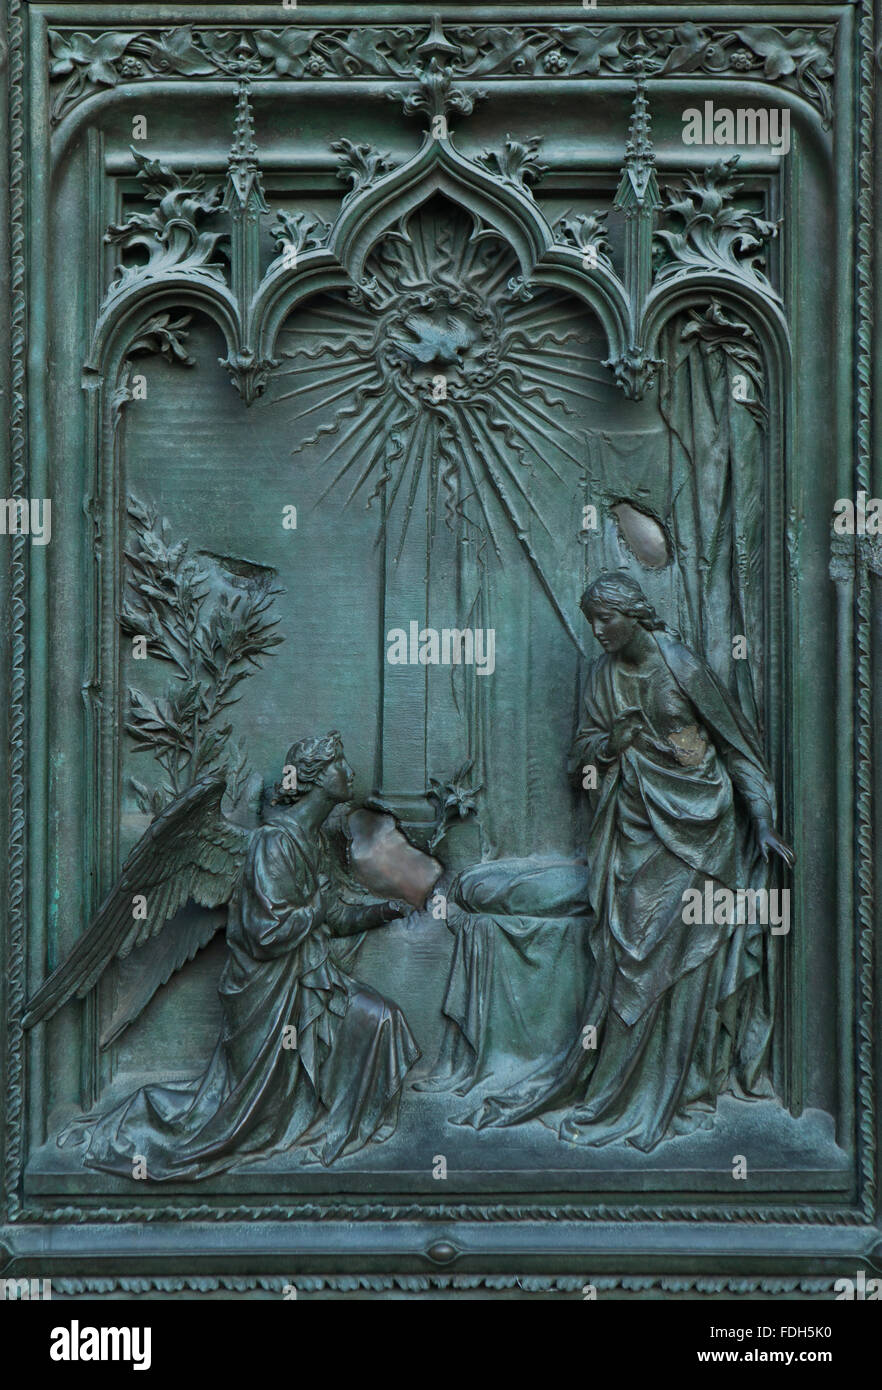 Annunciation. Detail of the main bronze door of the Milan Cathedral (Duomo di Milano) in Milan, Italy. The bronze door was desig Stock Photo